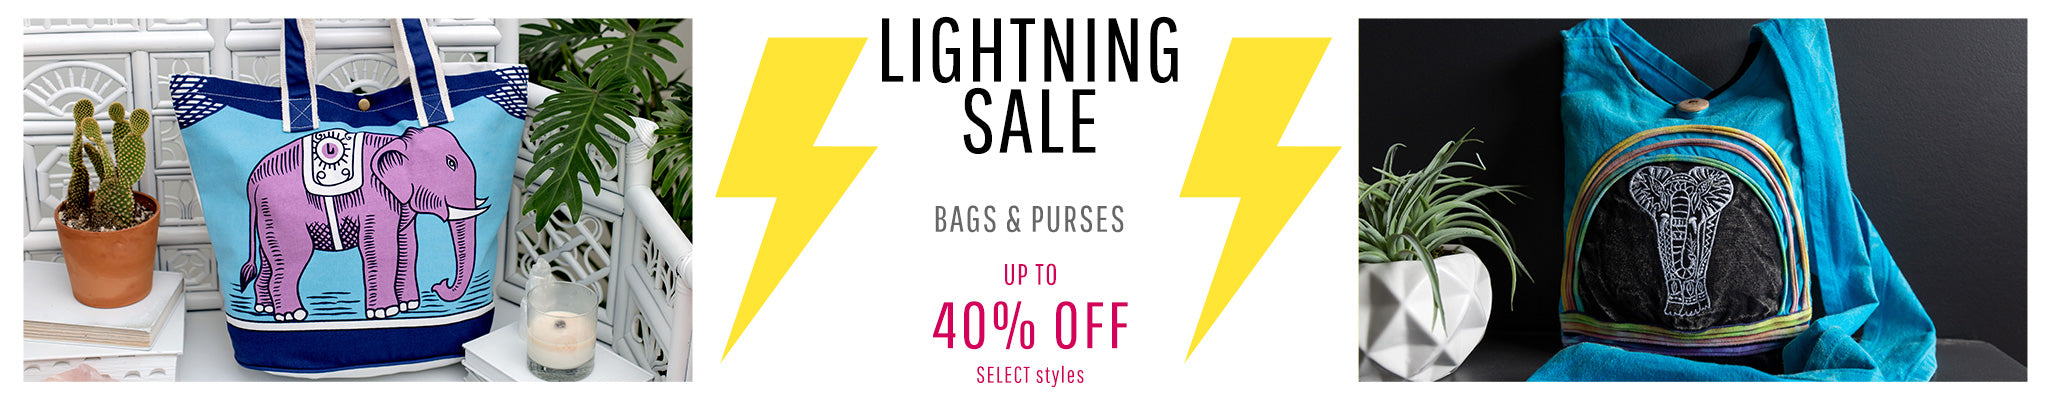 Lightning Sale - Bags & Purses